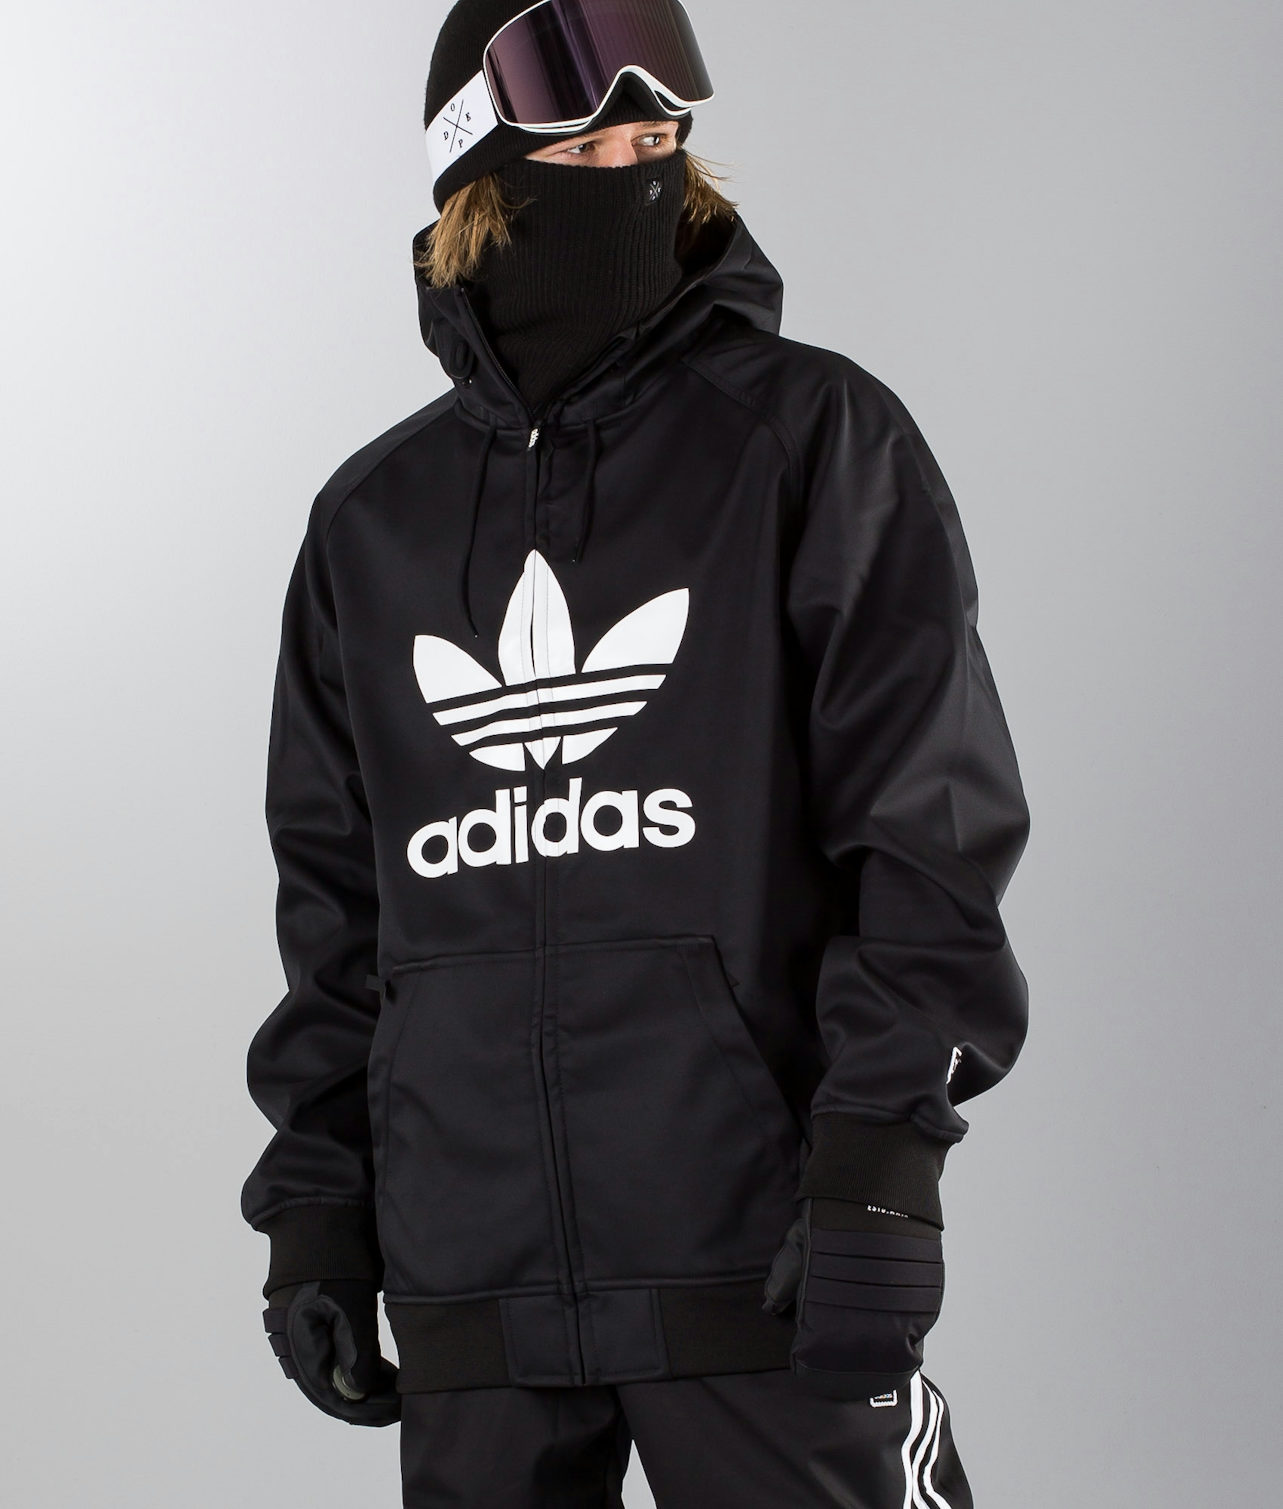 Adidas Snowboarding Greeley Snowboard Jacket Black/White - Ridestore.com